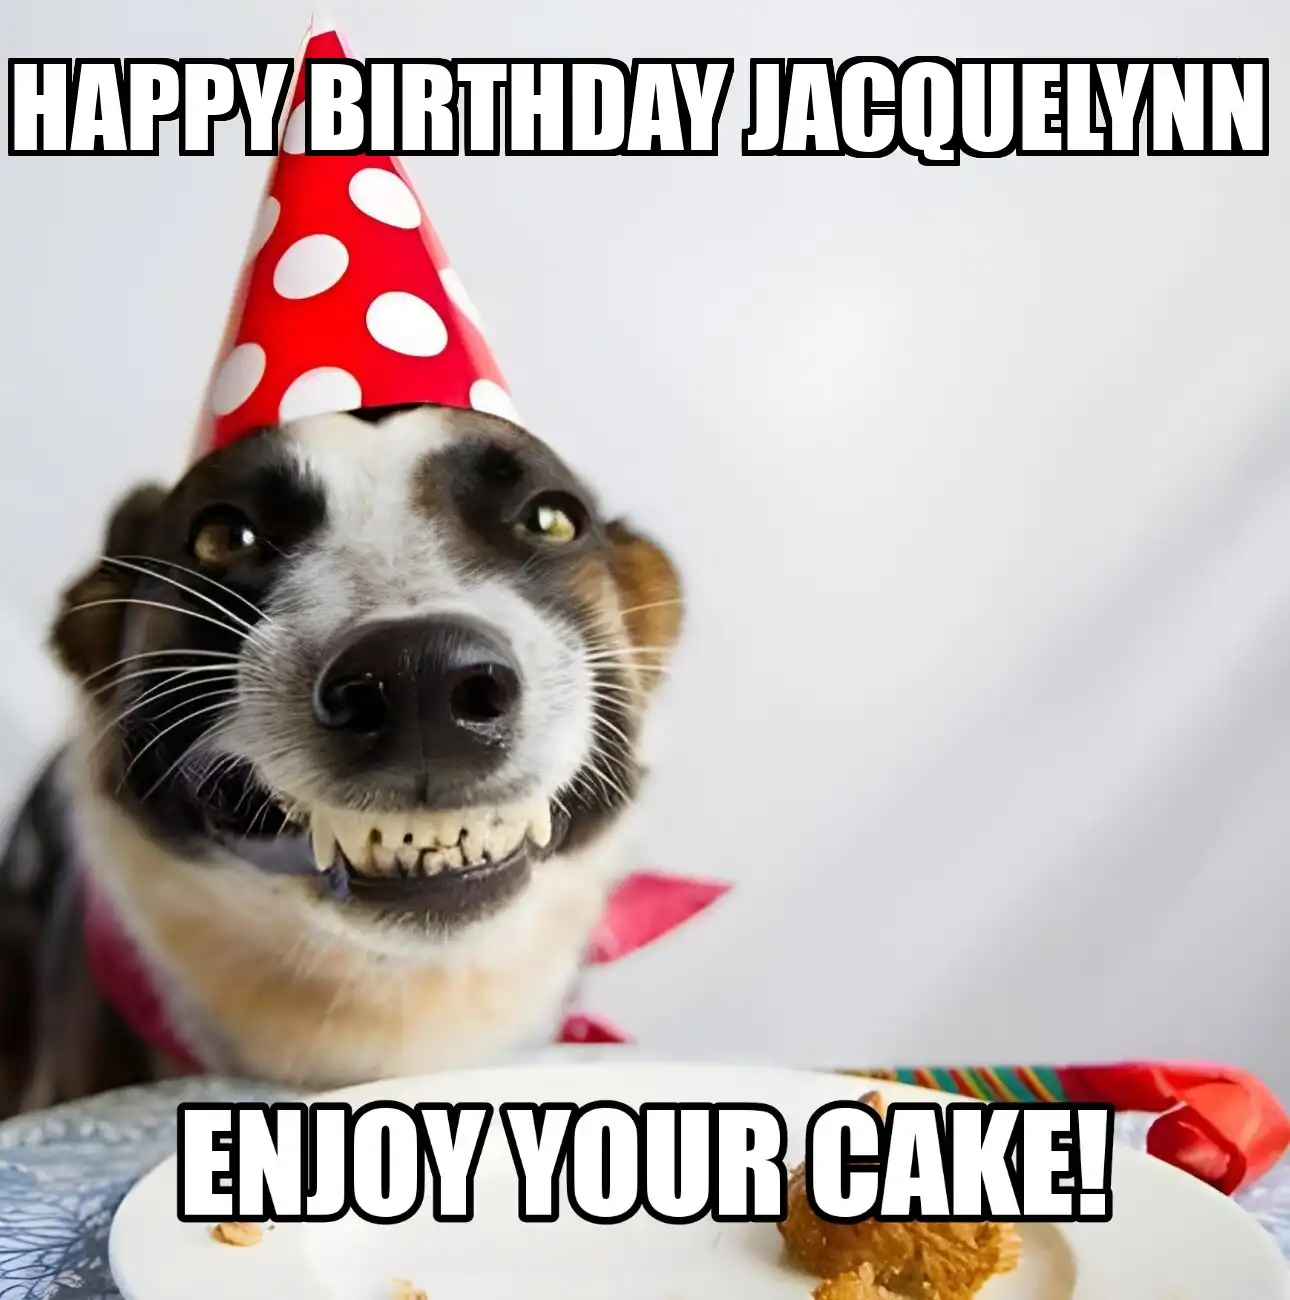 Happy Birthday Jacquelynn Enjoy Your Cake Dog Meme